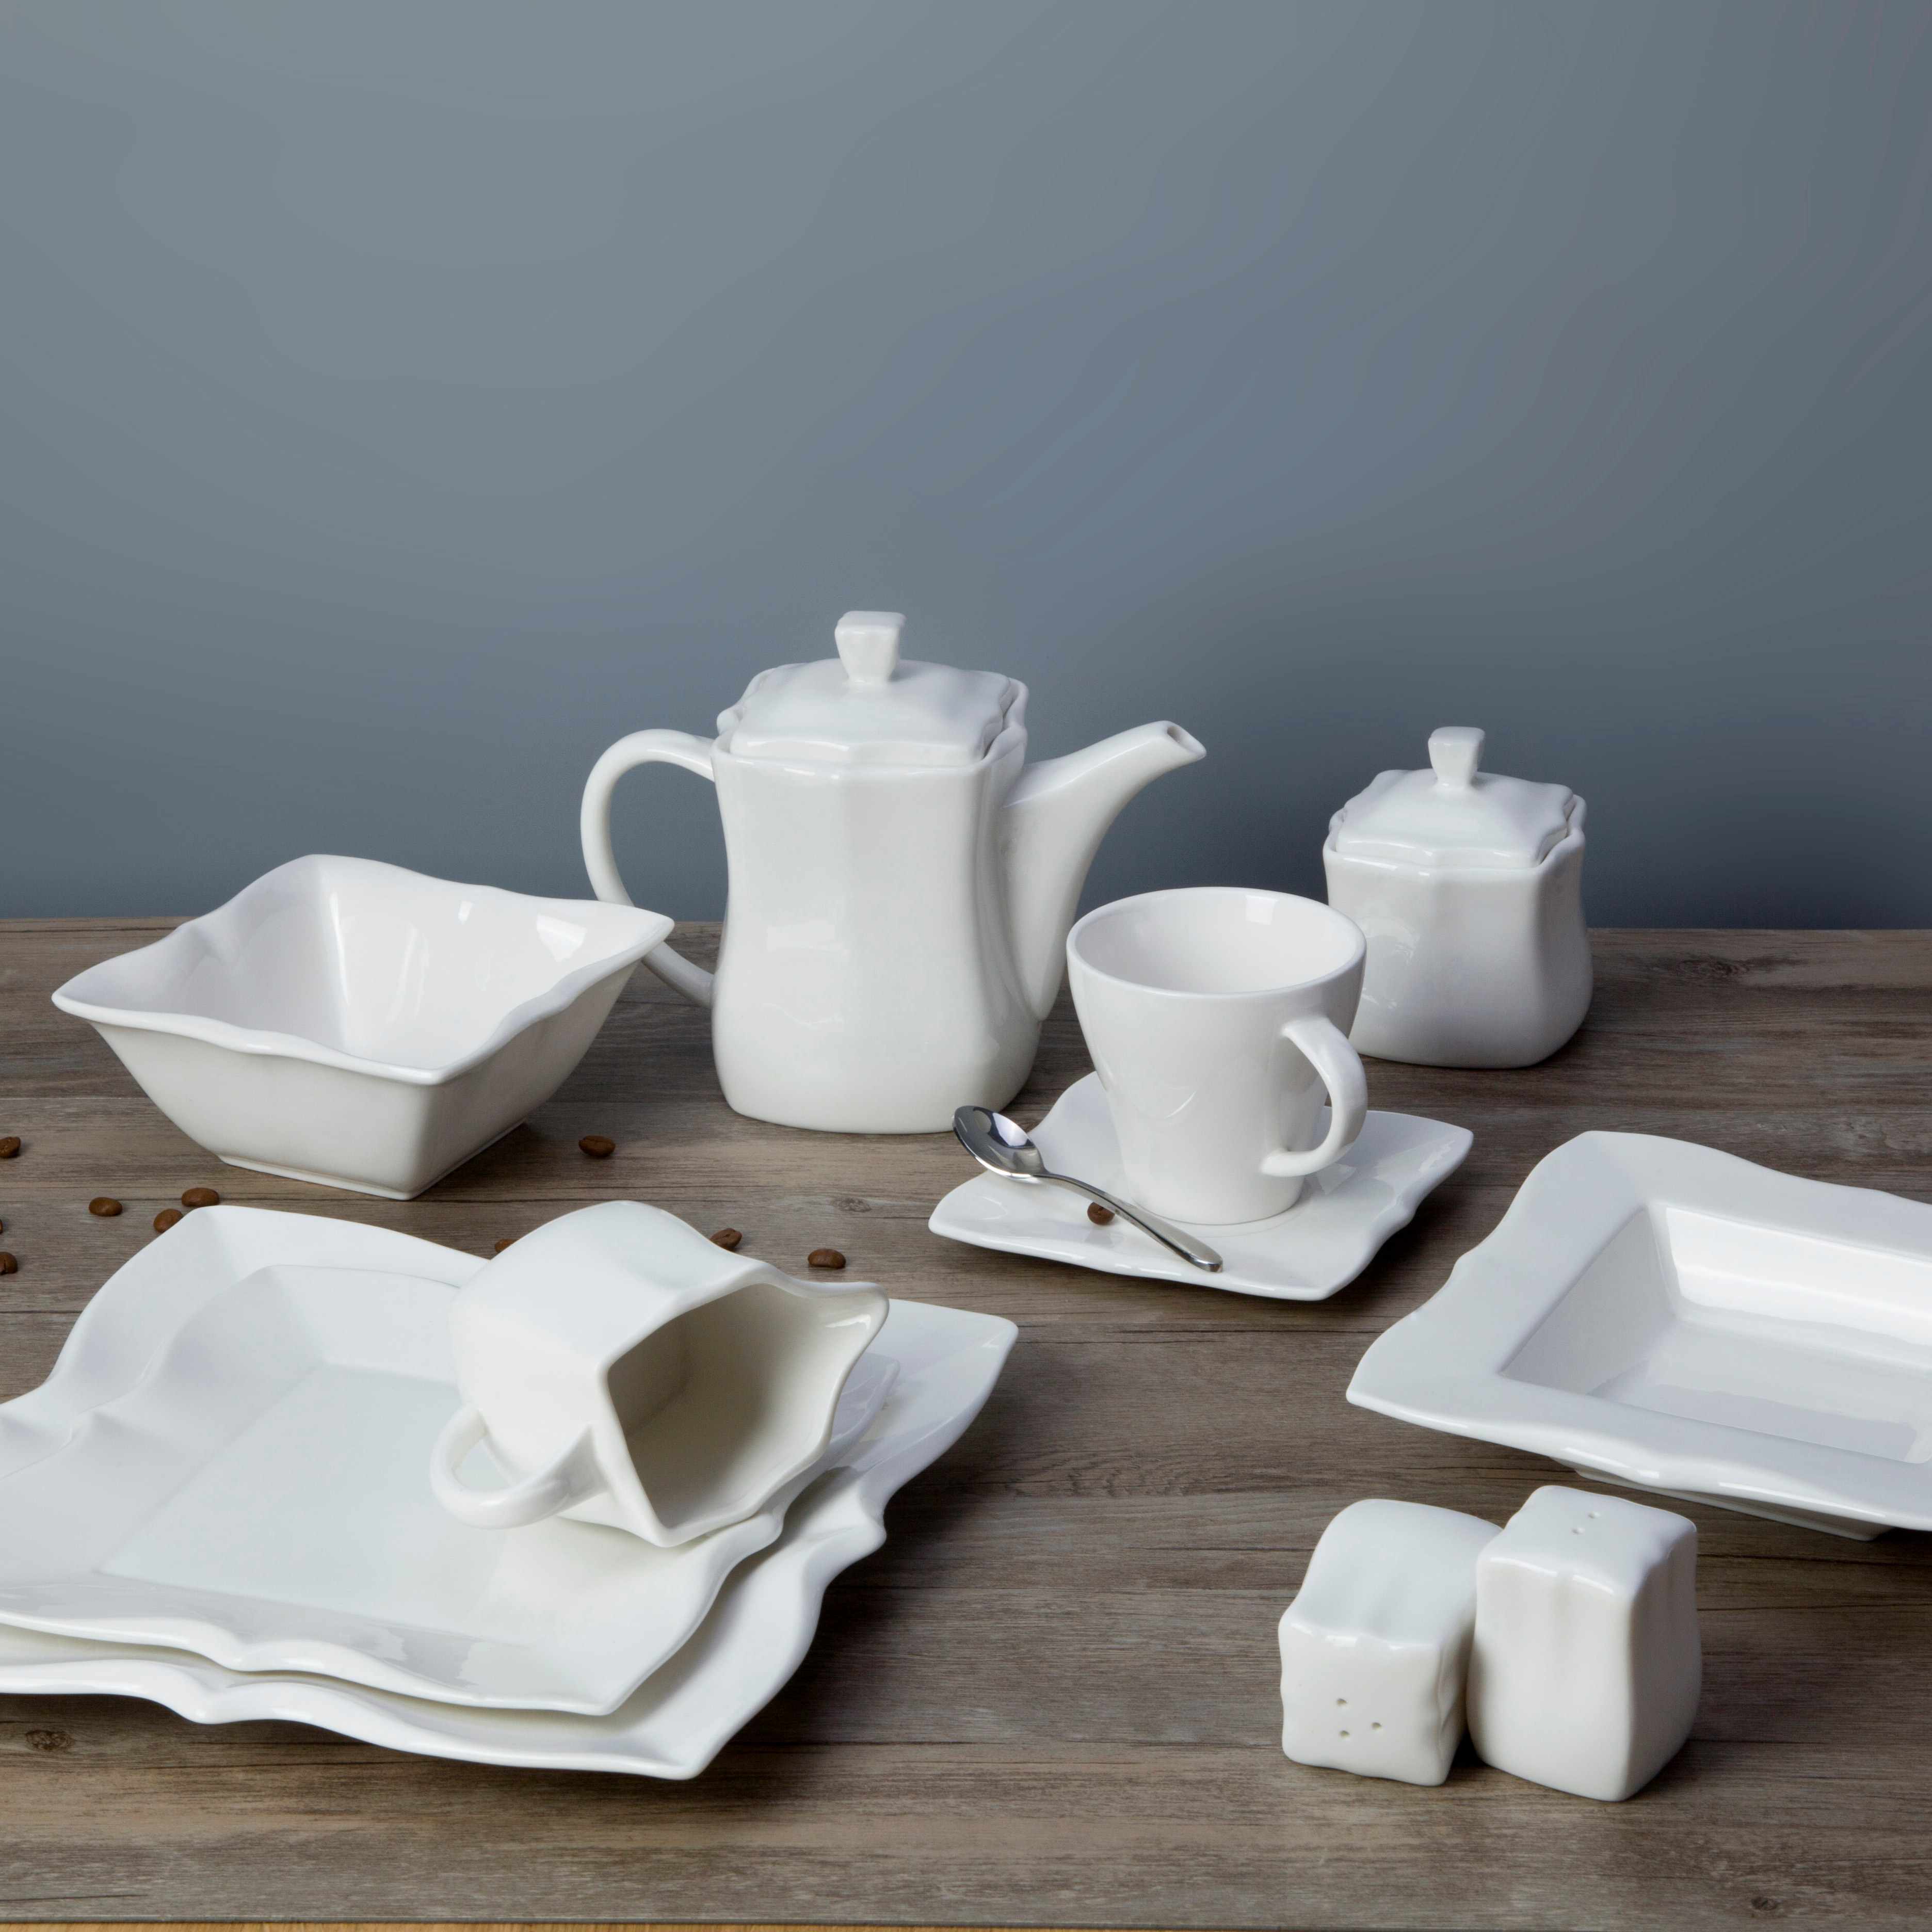 Two Eight White ceramic dinnerware set - ZHAN YI SERIES White Porcelain Dinner Set image16